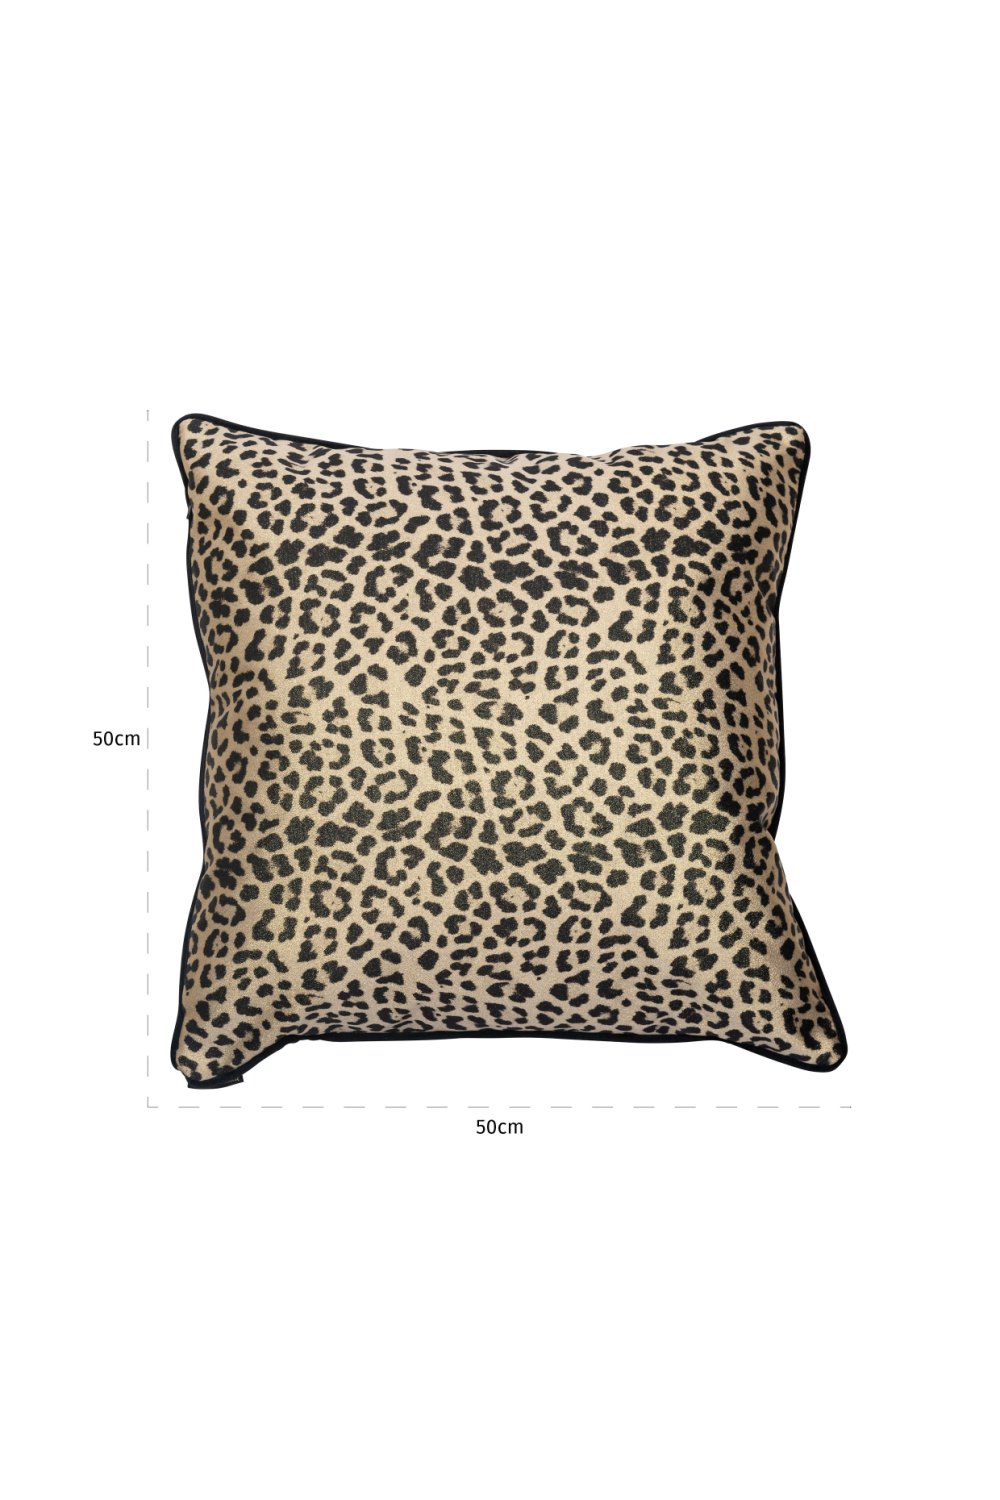 Leopard Print Throw Pillow | OROA Jess | OROA.com